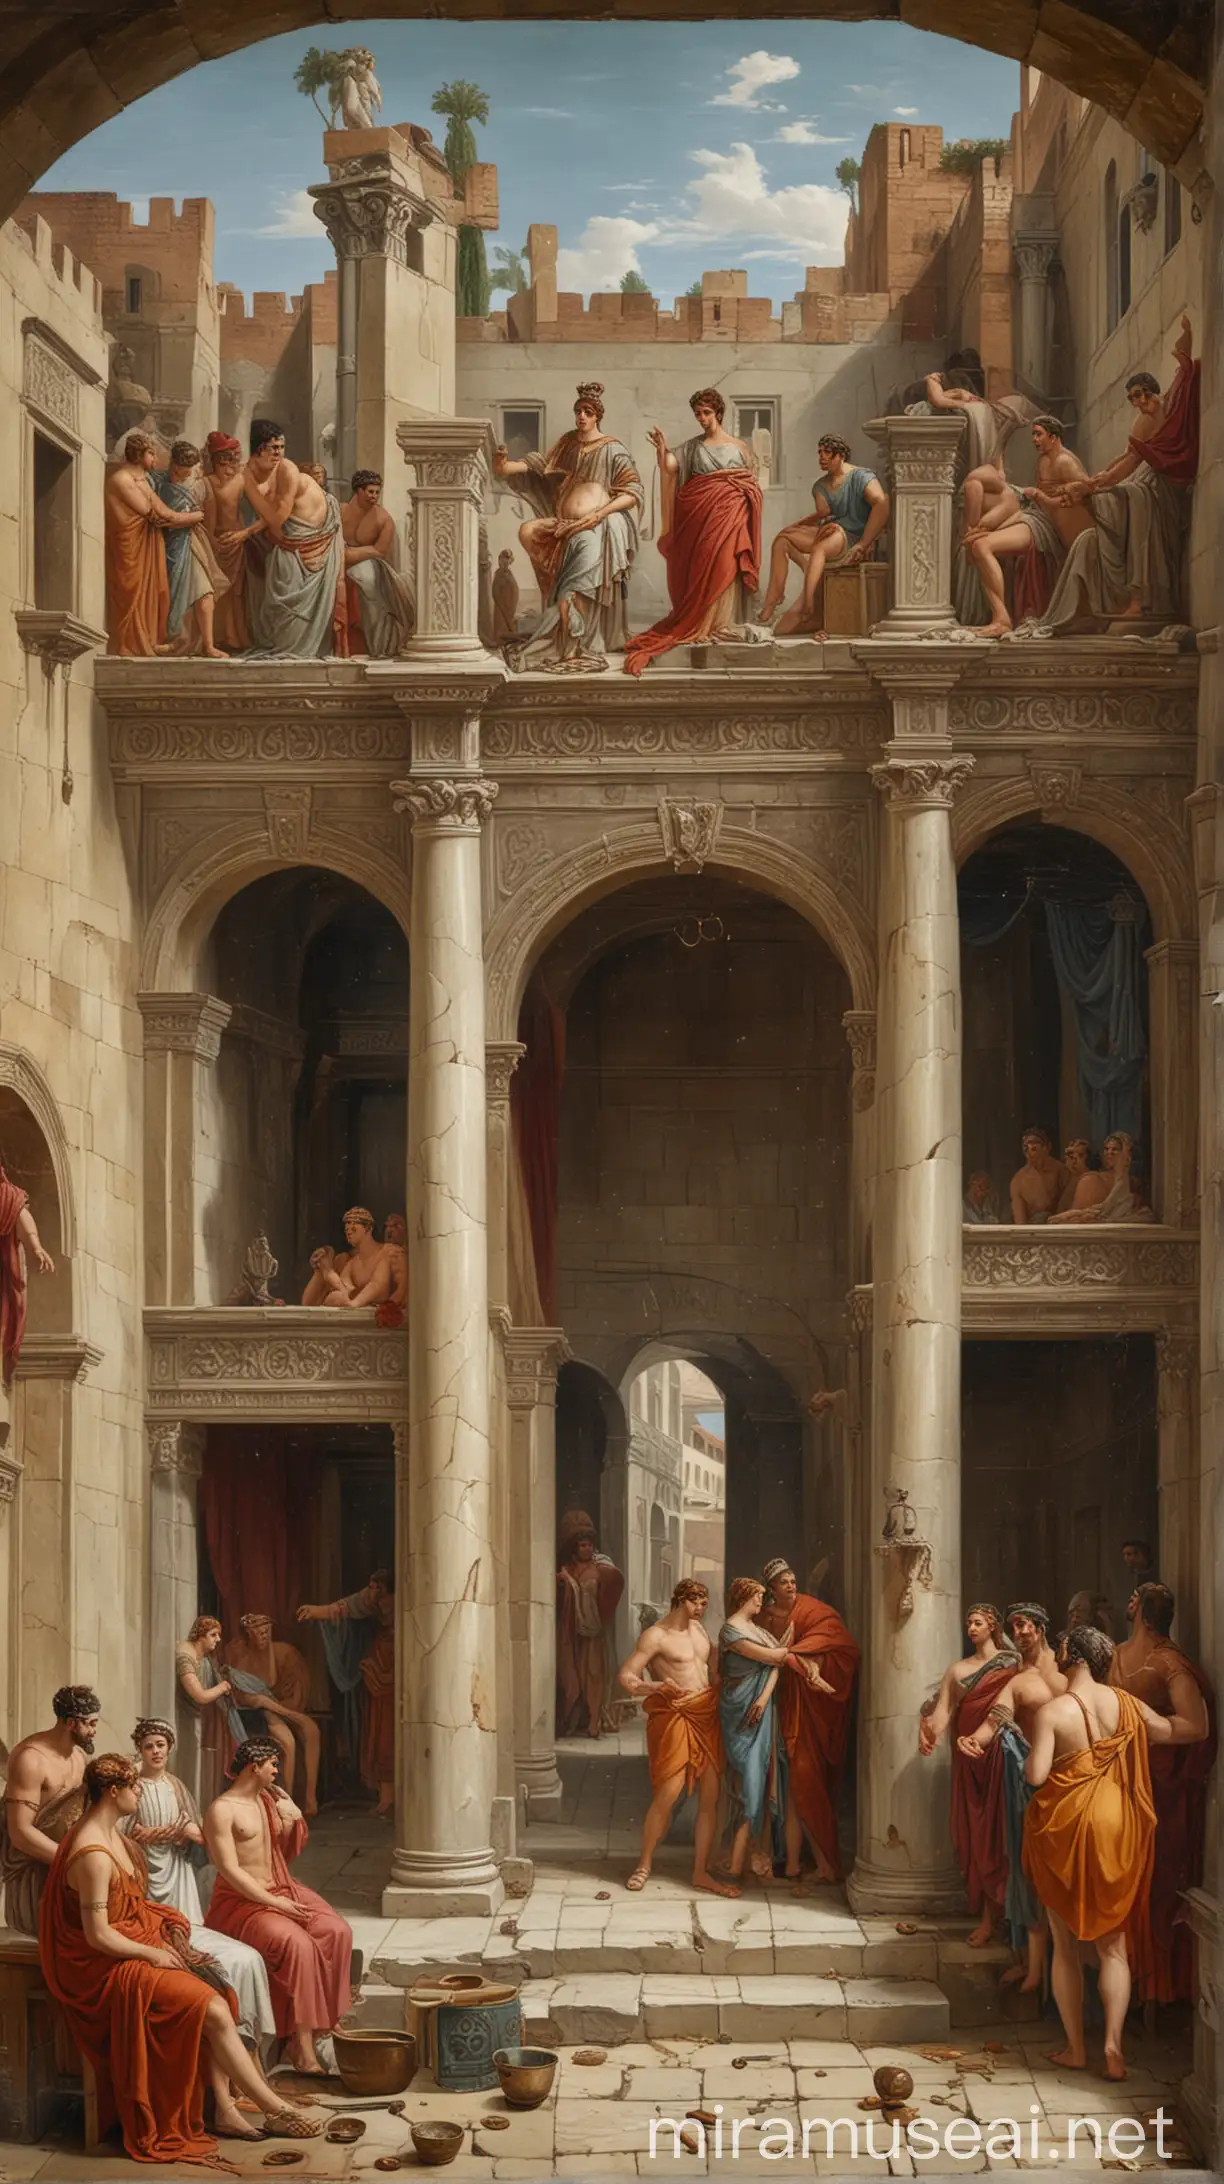 Emperor Elagabalus Establishes Brothel in Palace Courtyard